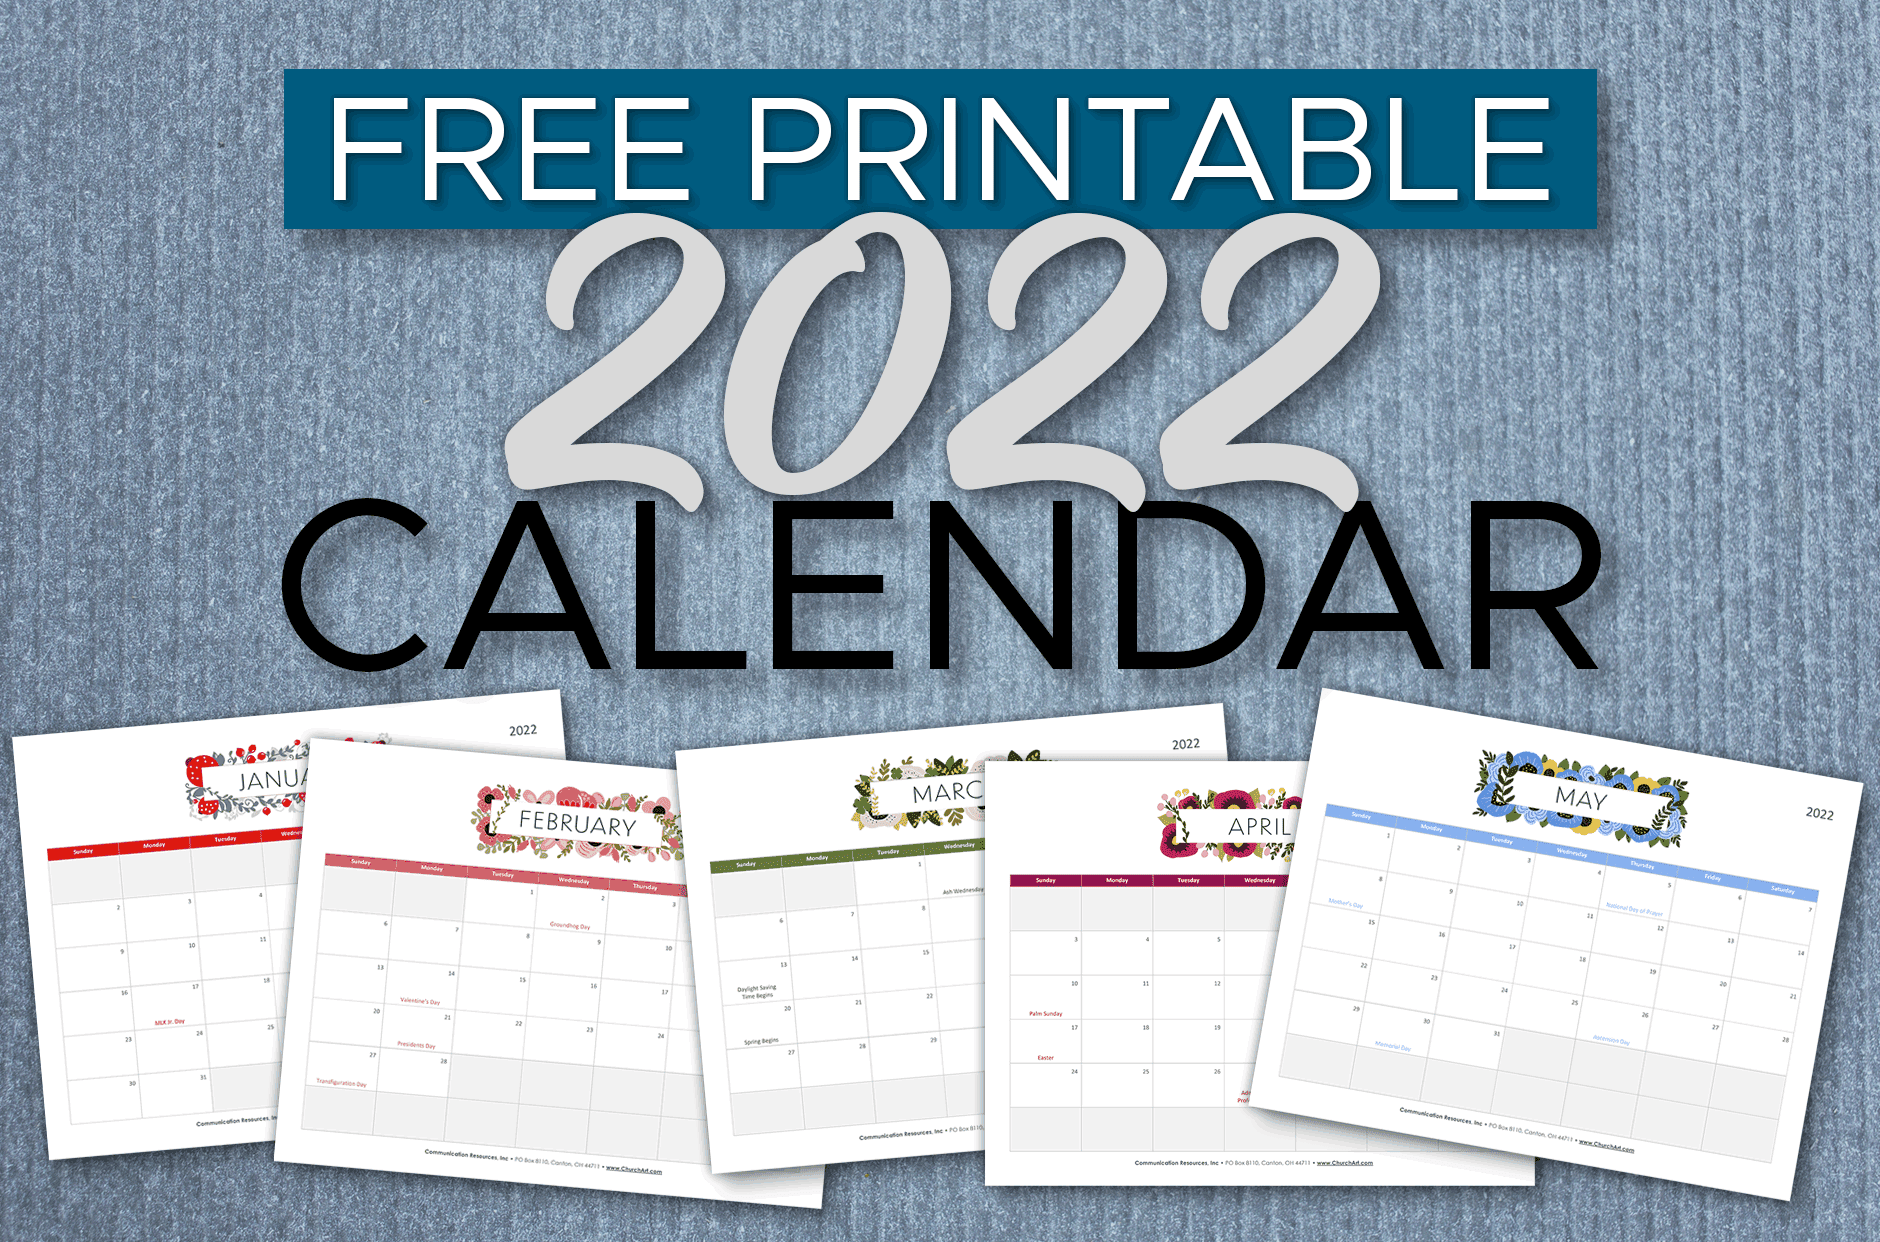 Church Calendar 2022 Free Printable 2022 Church Calendar | Churchart.com Blog